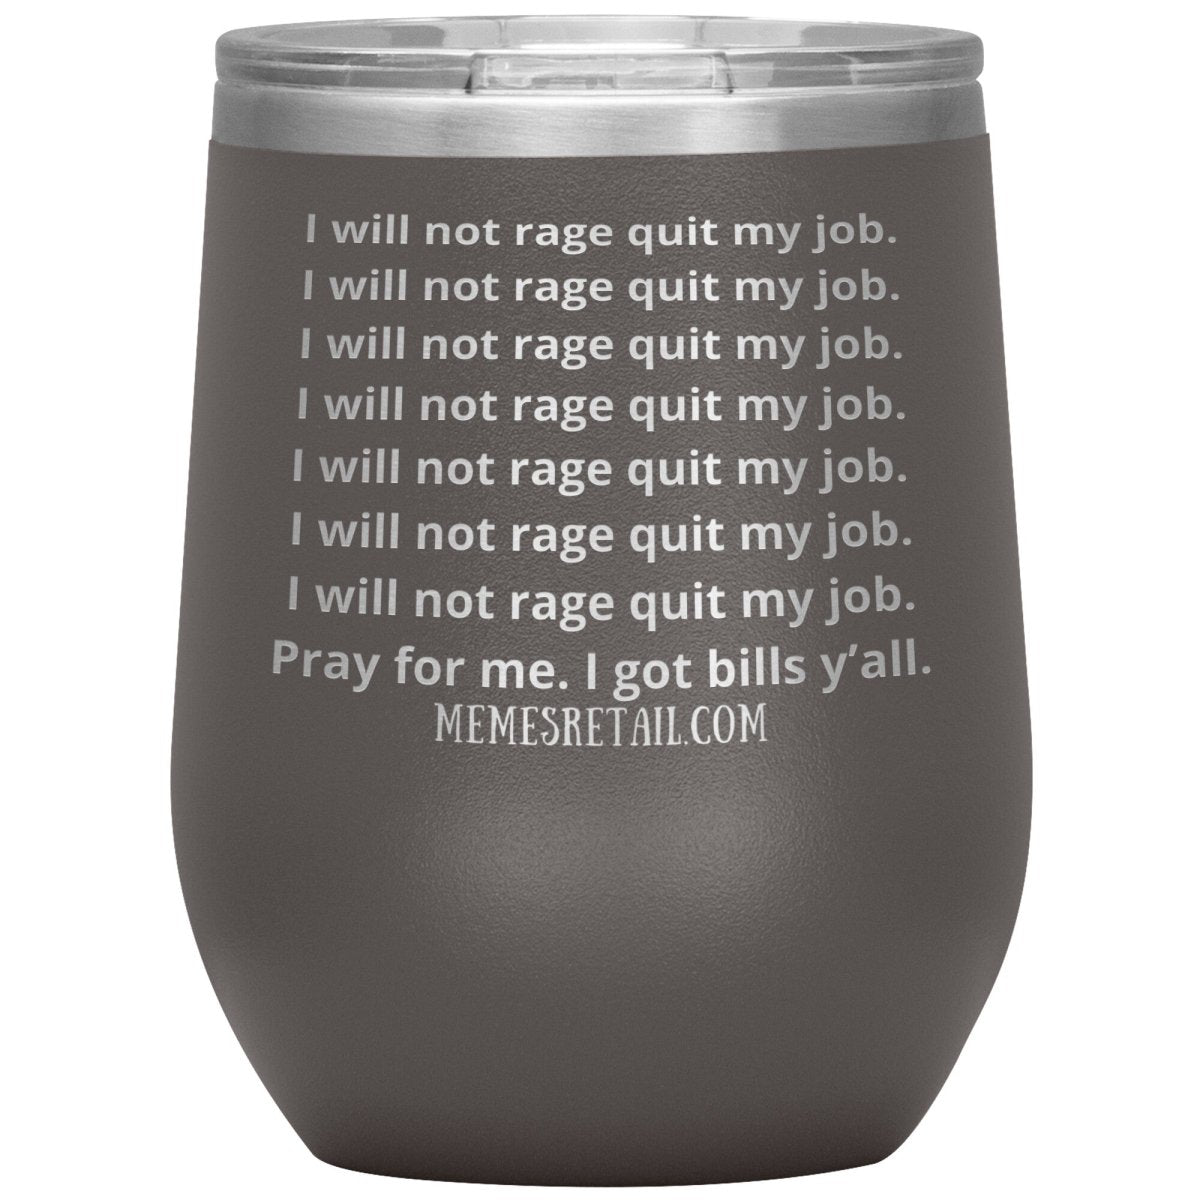 I will not rage quit my job Tumblers, 12oz Wine Insulated Tumbler / Pewter - MemesRetail.com